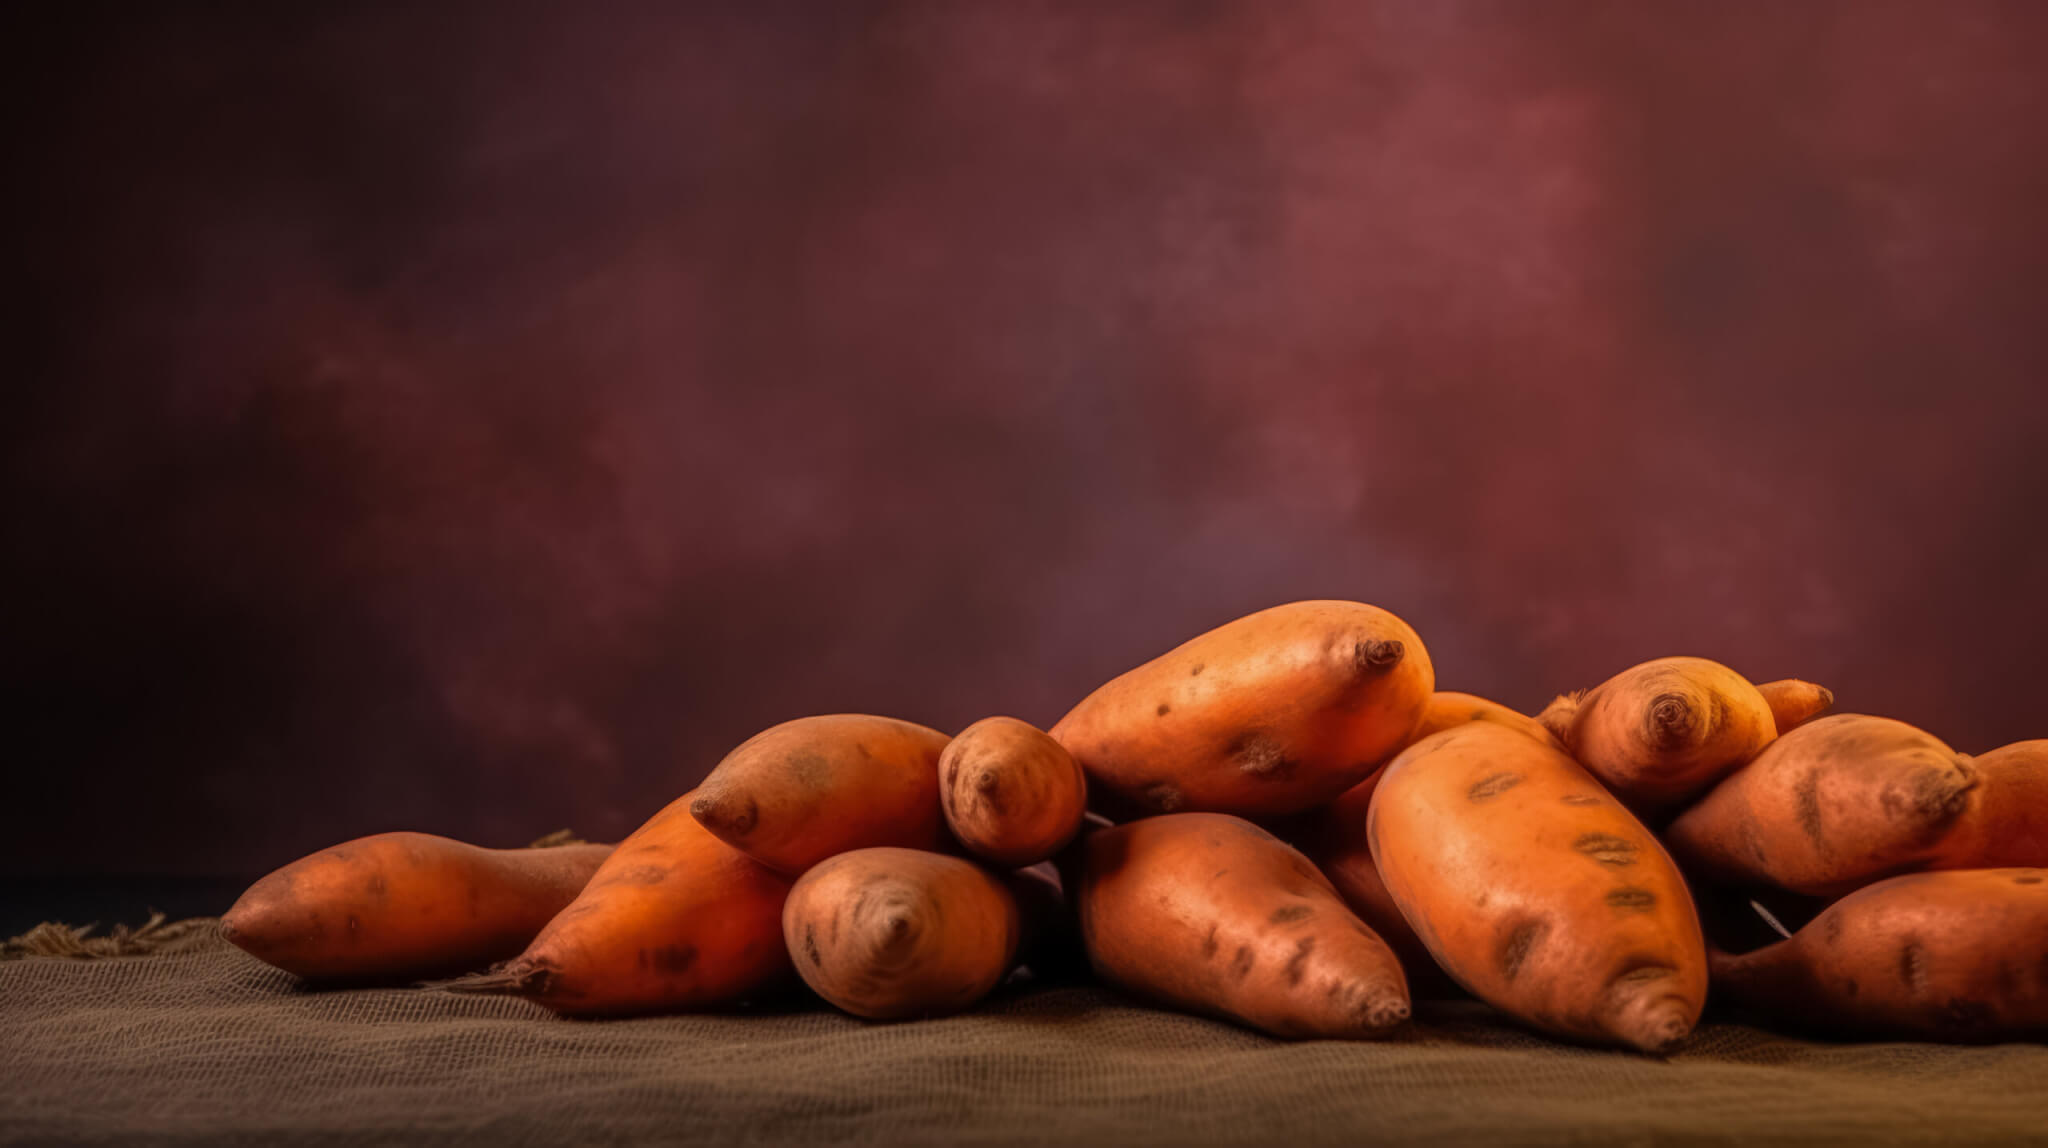 Ripe sweet potatoes